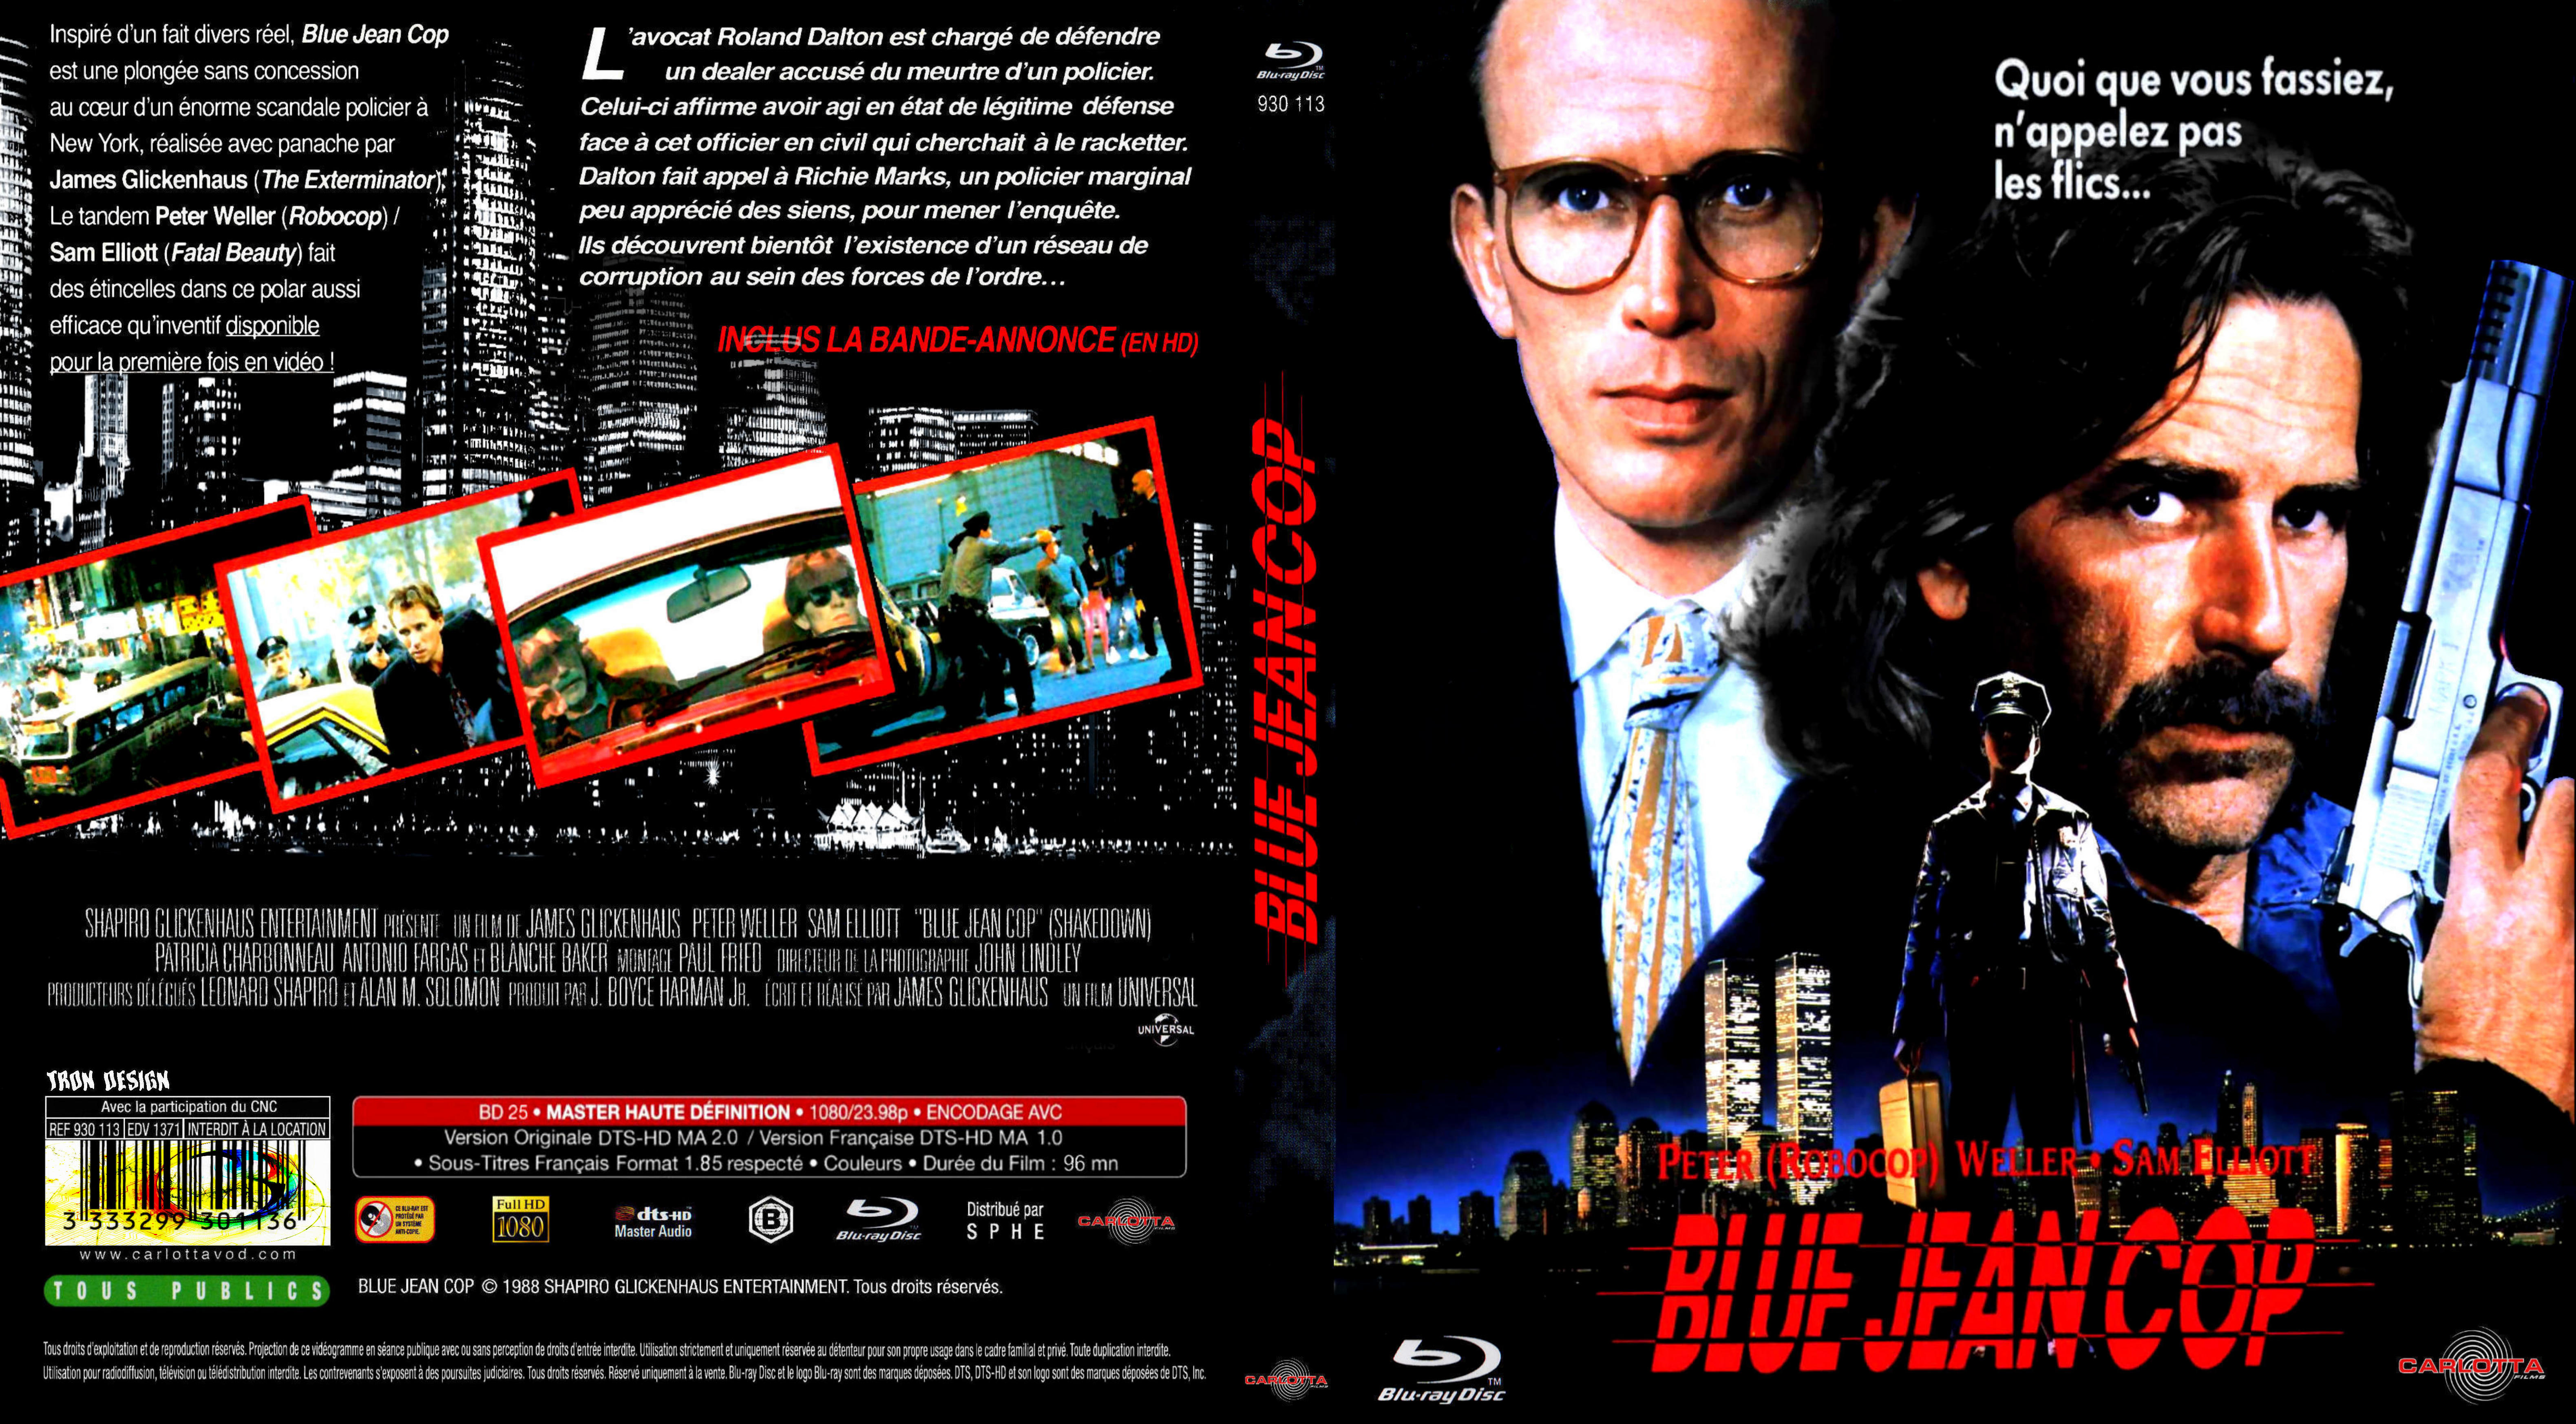 Jaquette DVD Blue jean cop custom (BLU-RAY) v2